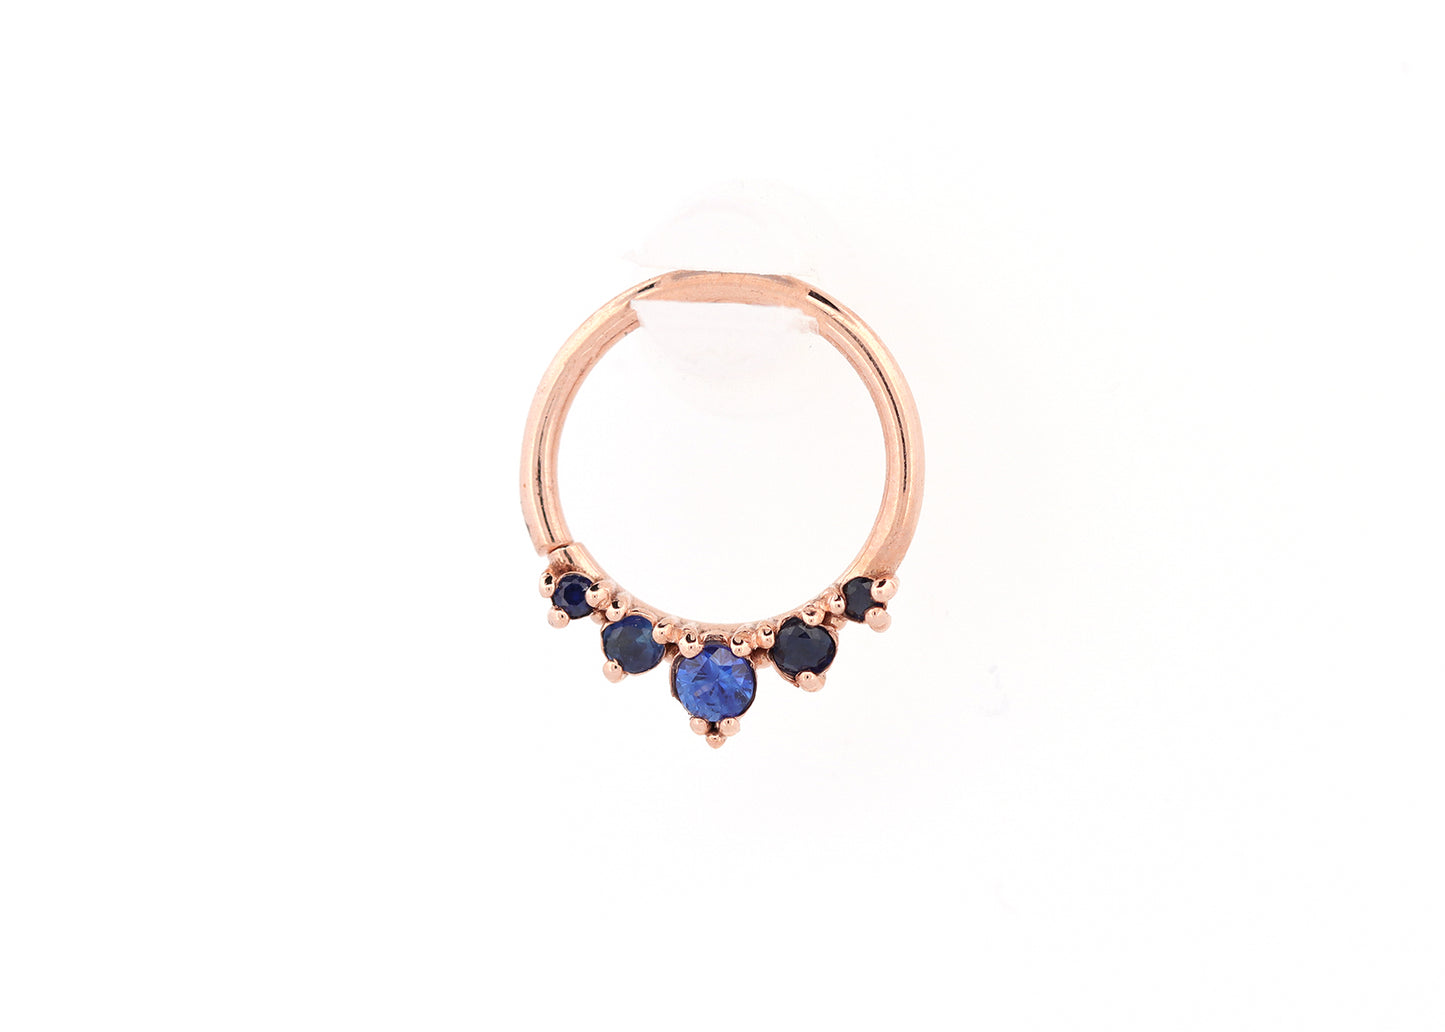 18g Throne Genuine Blue Sapphires Seam Ring